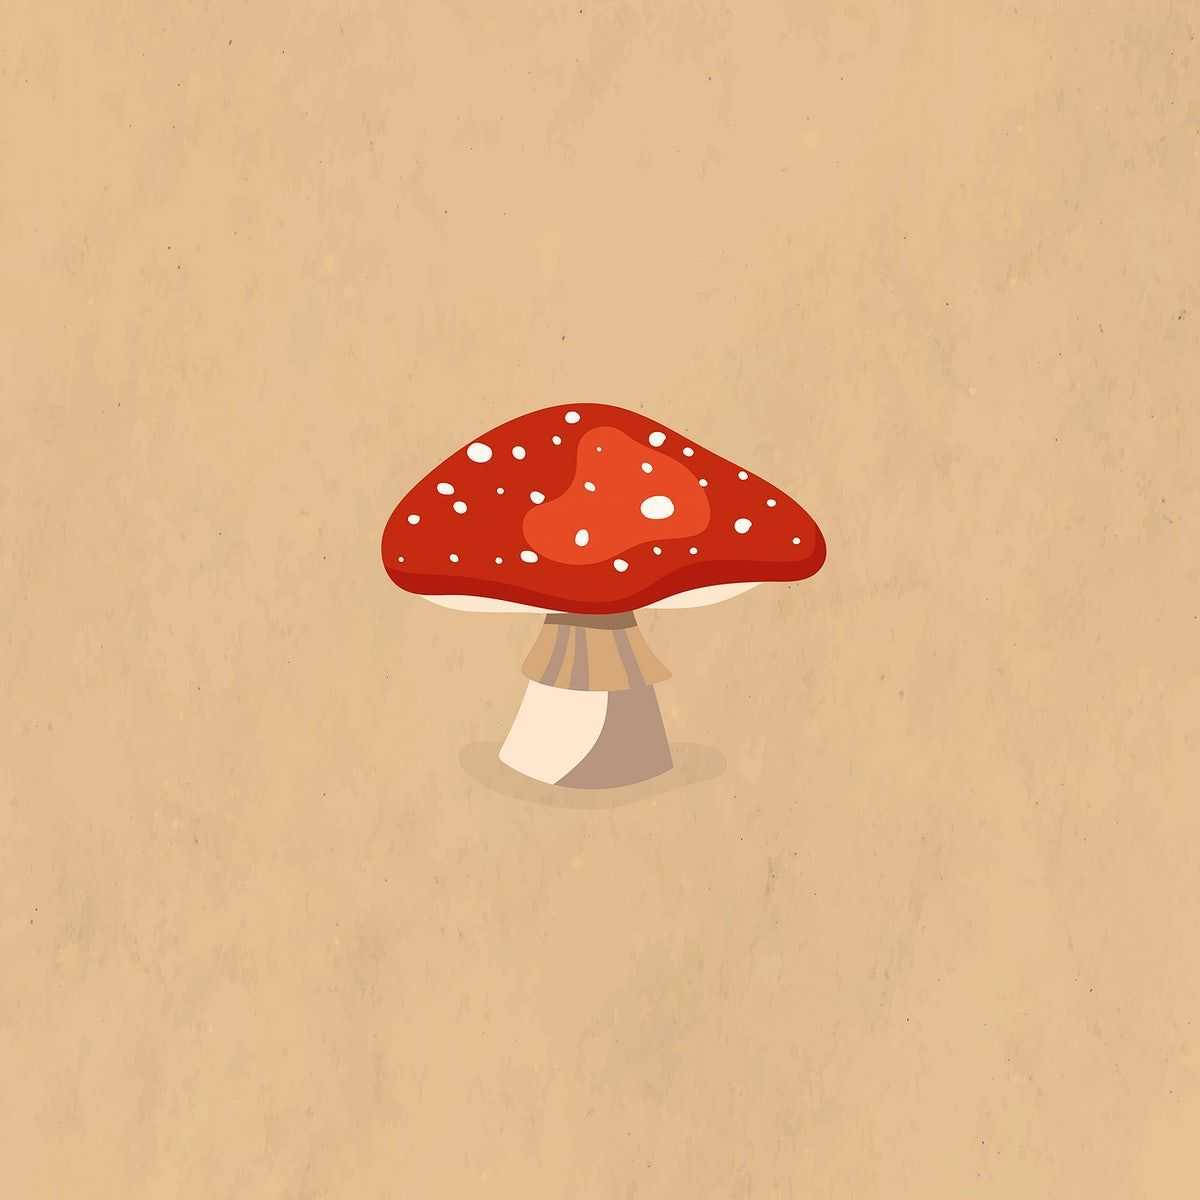 Red Cap Mushroom Aesthetic Wallpaper